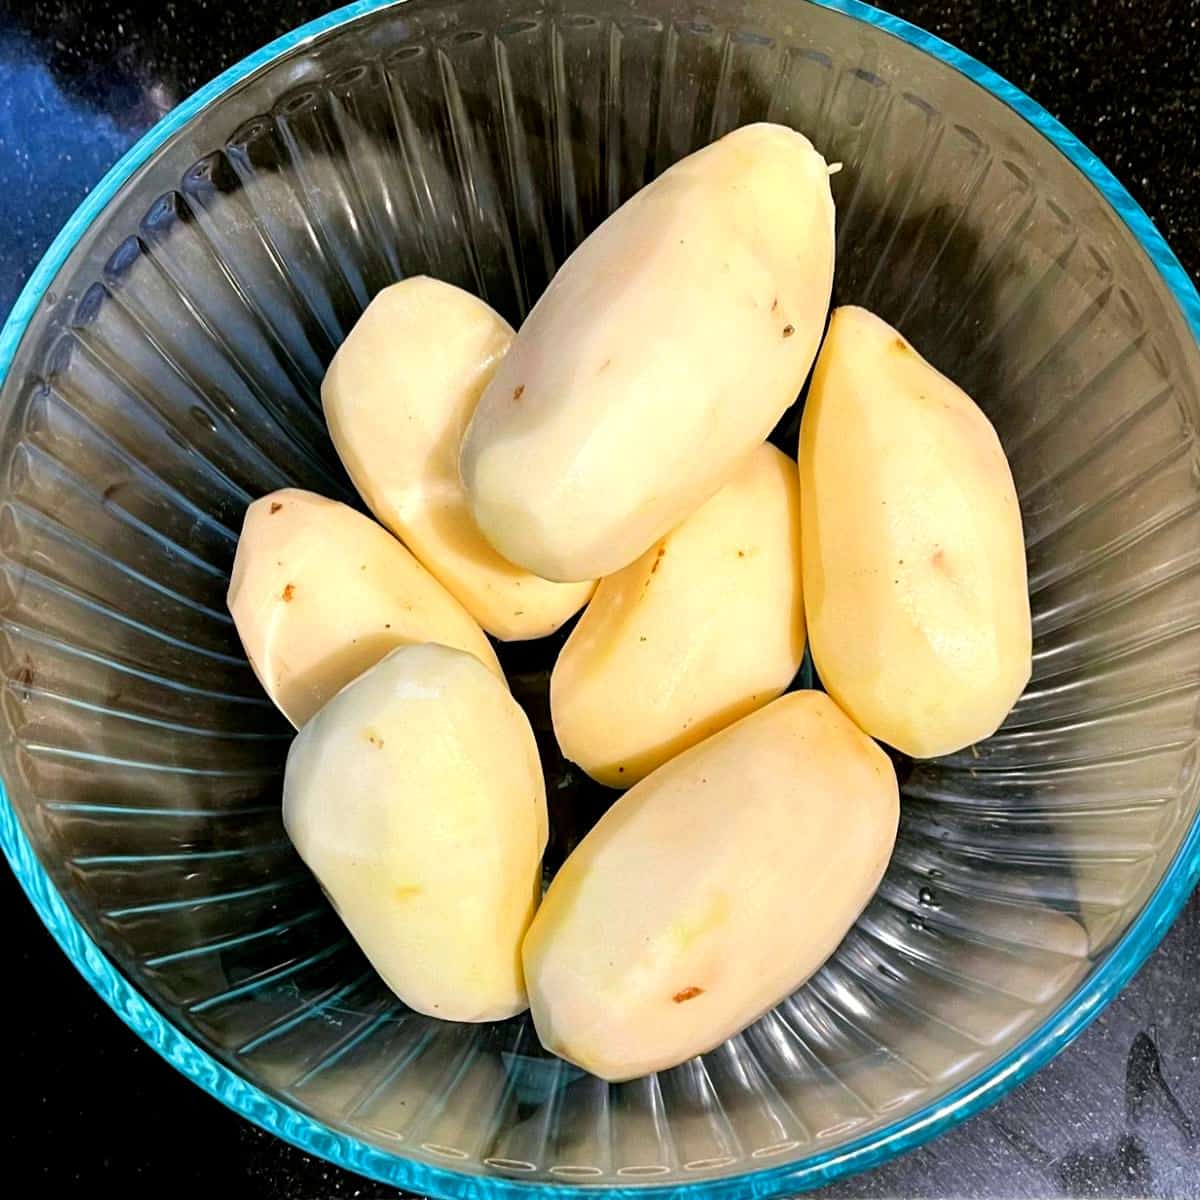 Peeled potatoes in bowl.